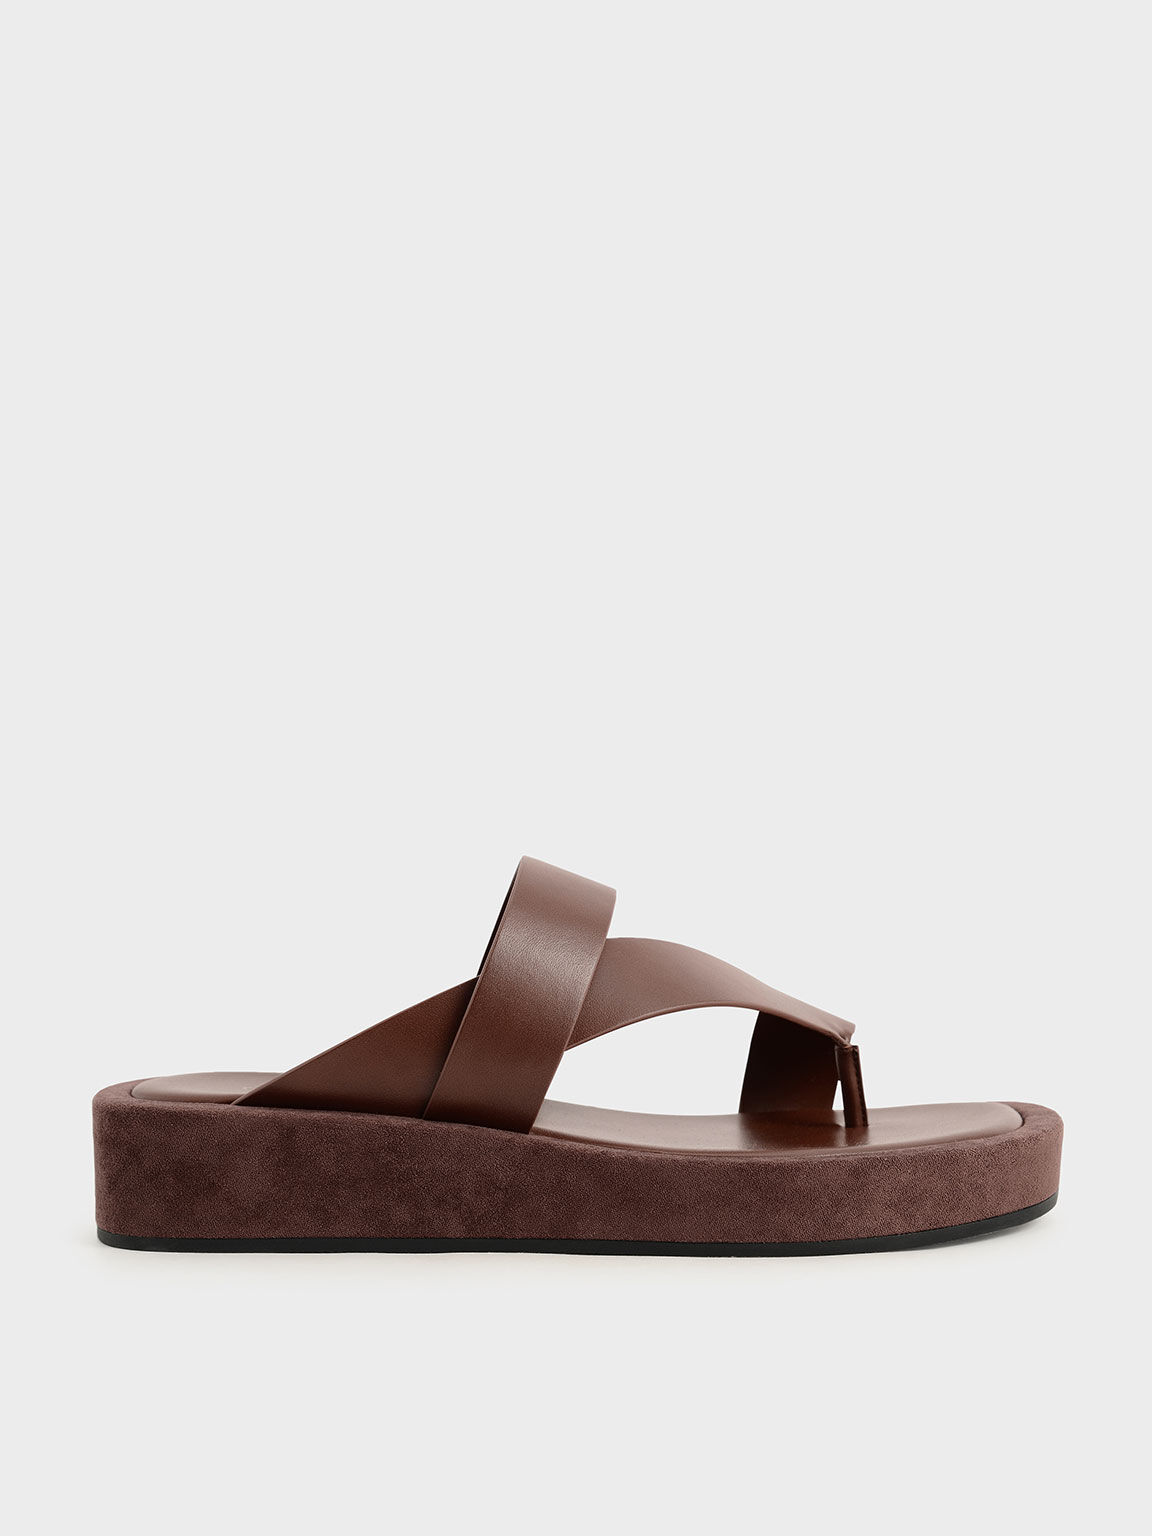 Sandal Platform Toe-Loop, Brown, hi-res